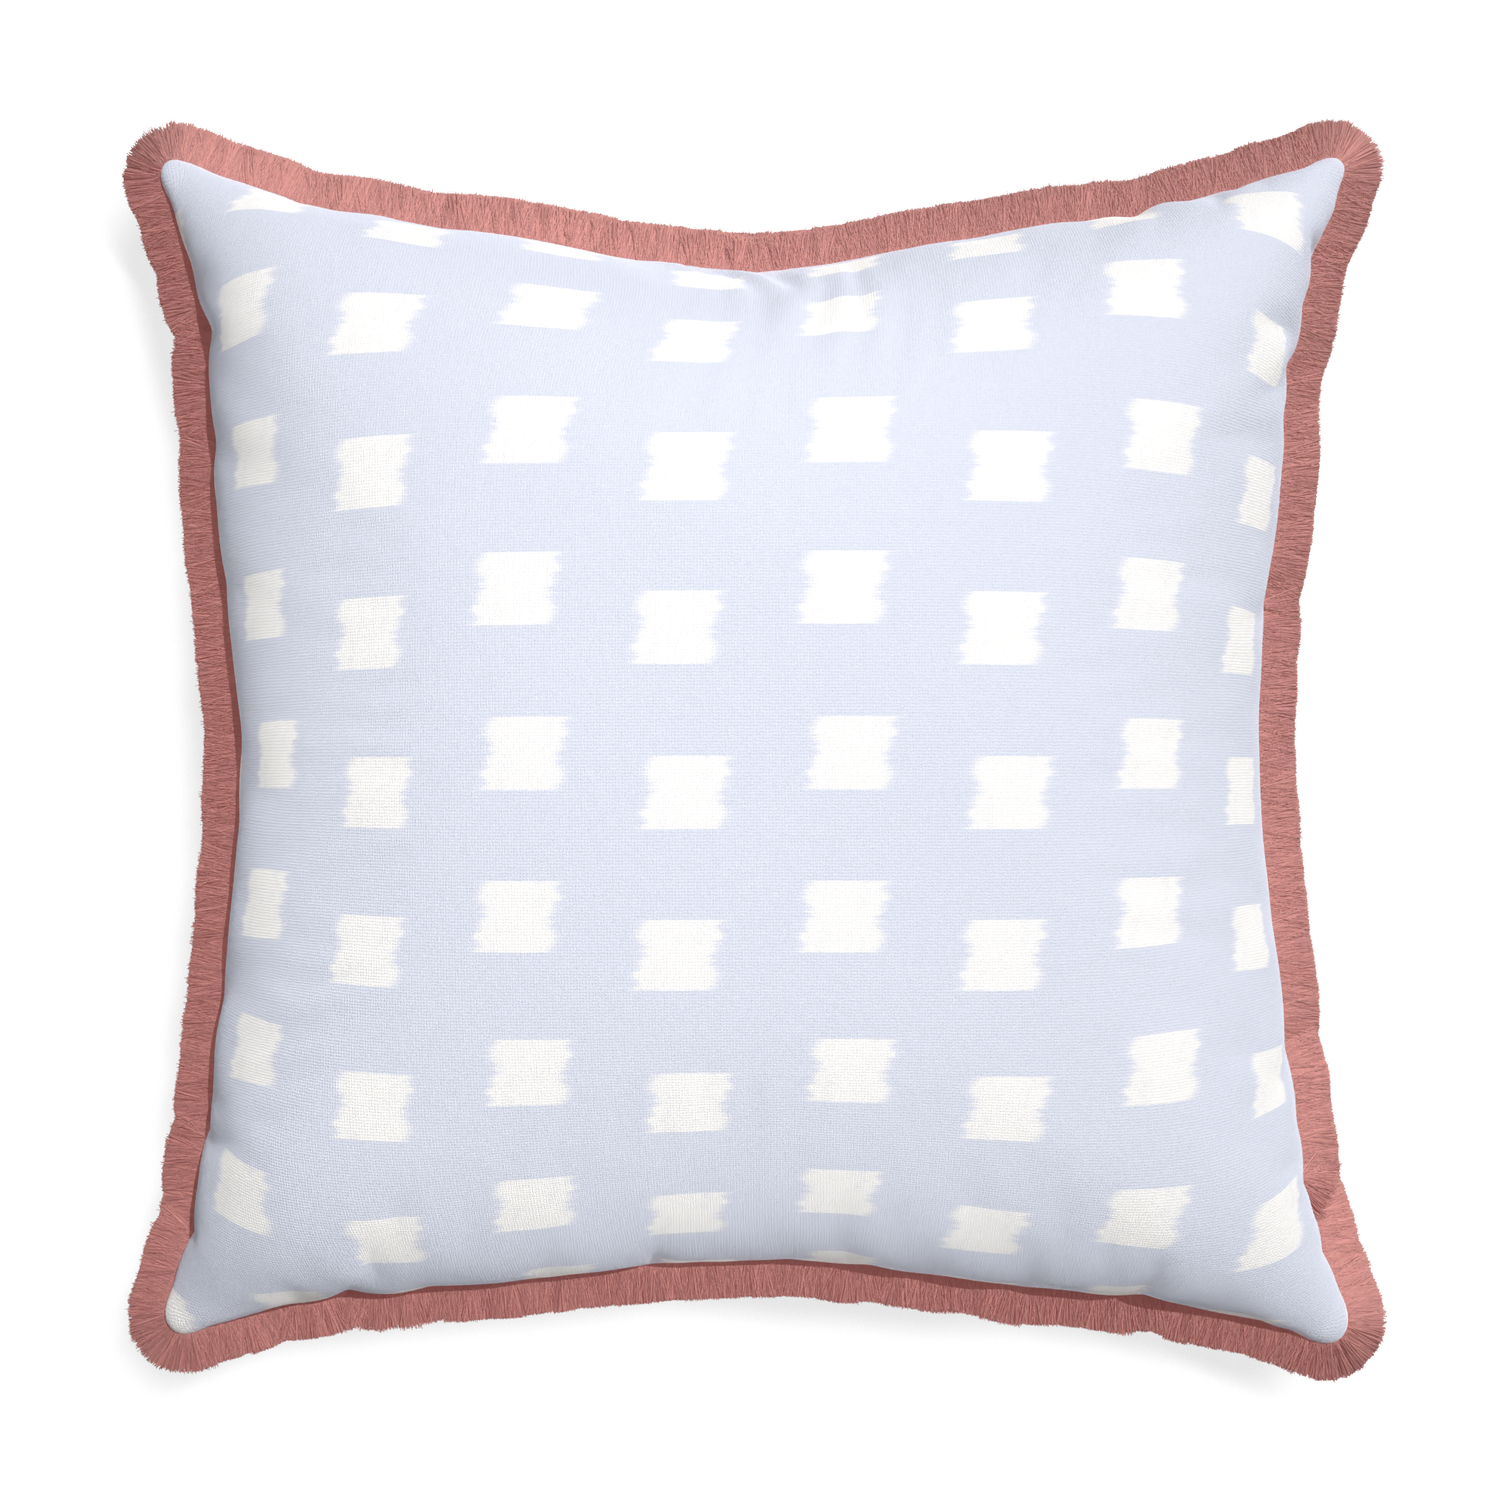 Euro-sham denton custom pillow with d fringe on white background